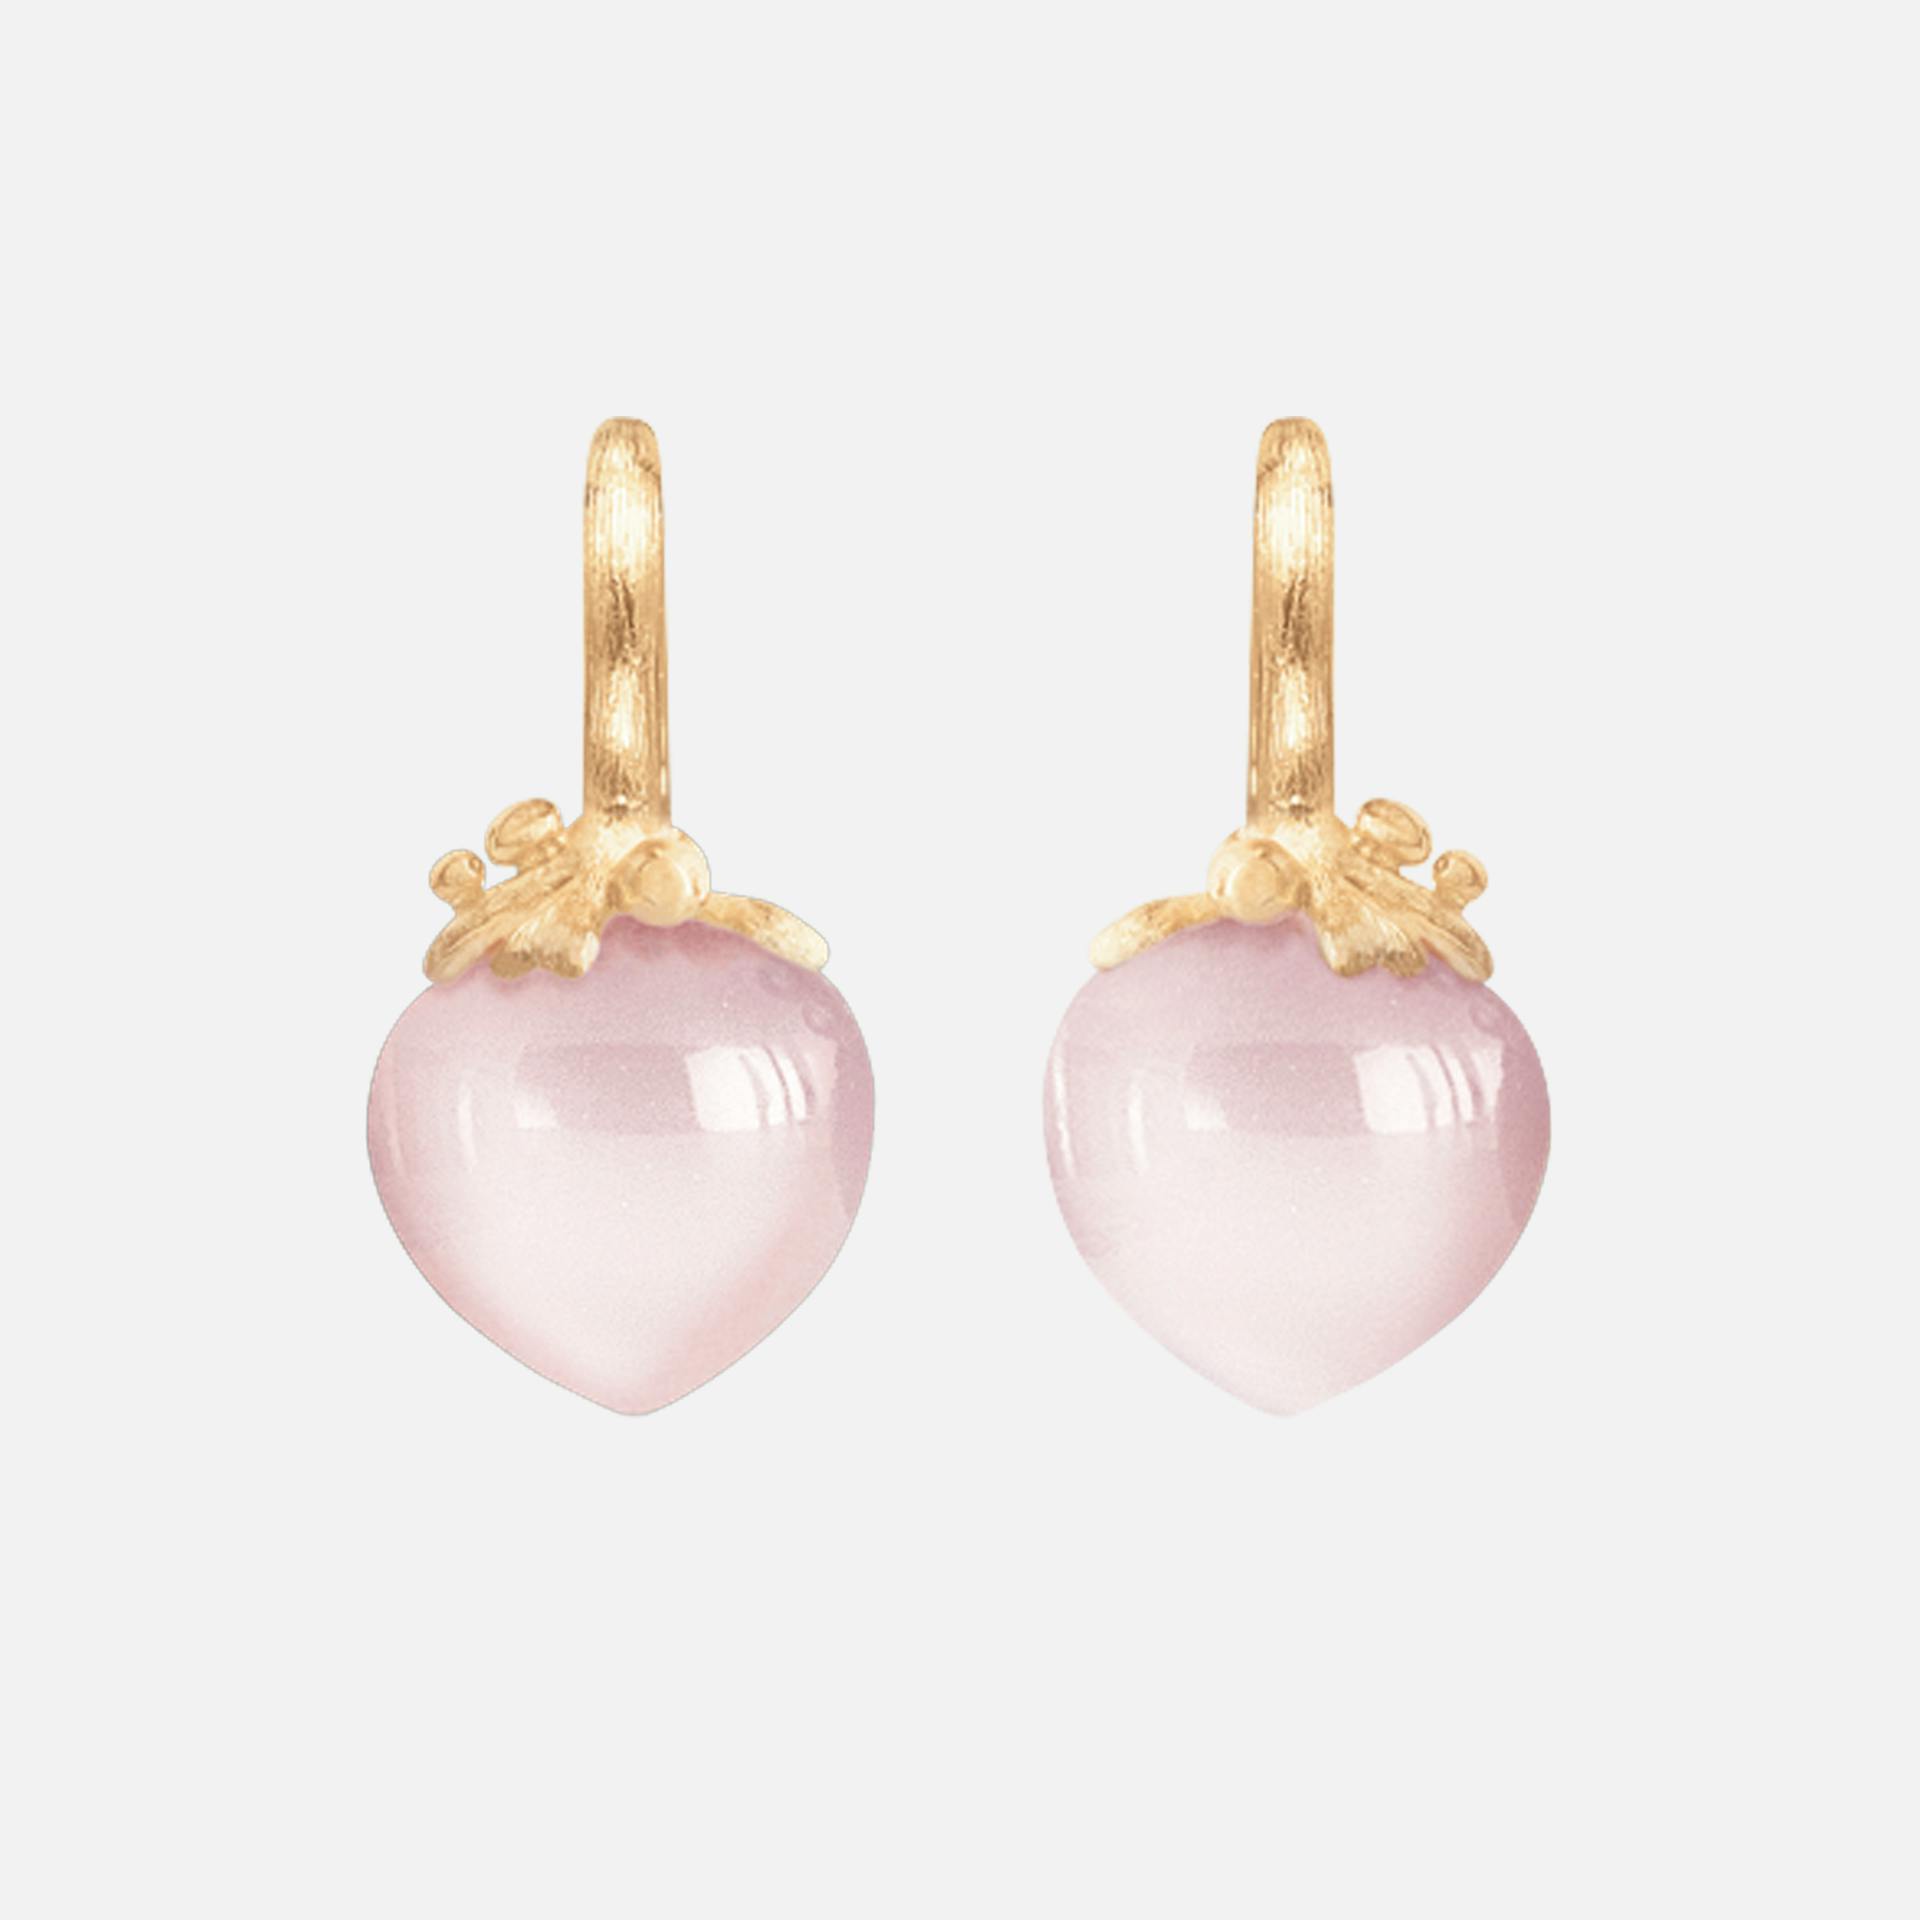 Dew drops filigree earrings 18k gold with rose quartz